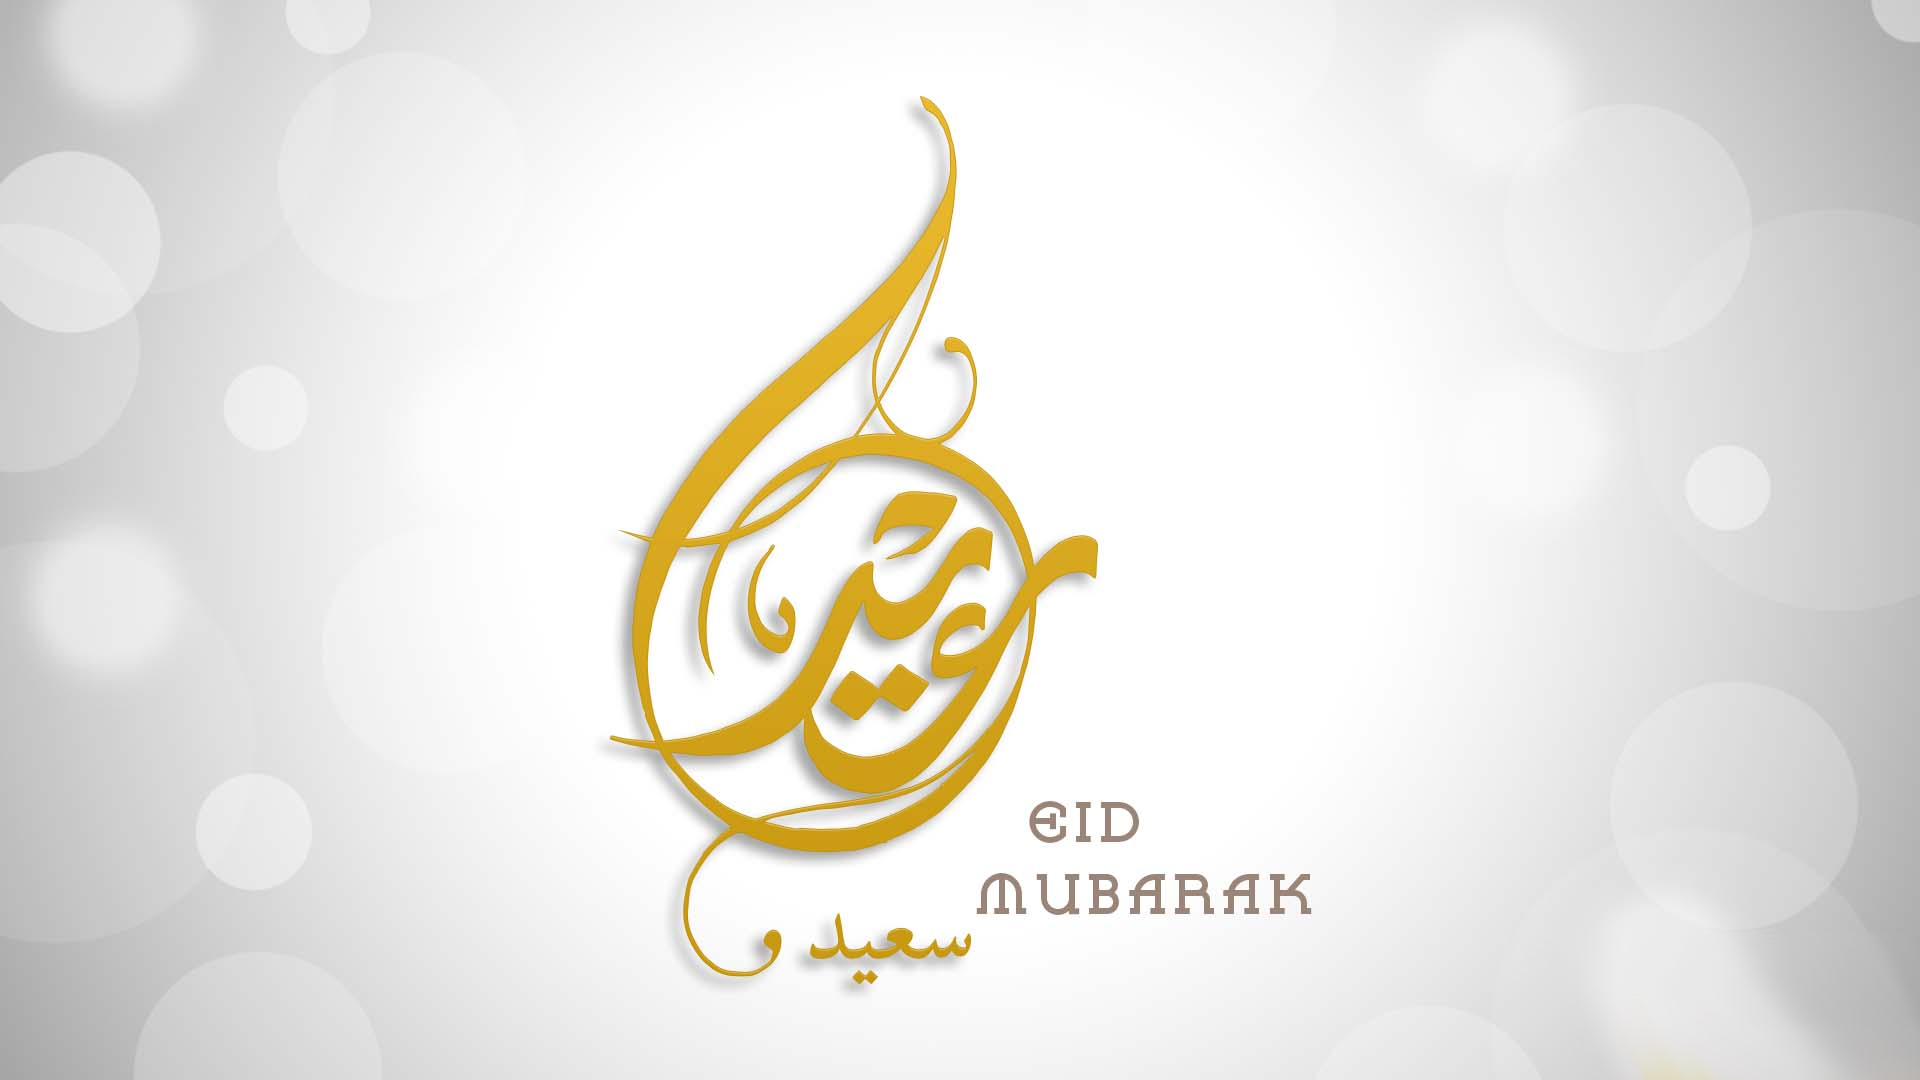 Newer-Eid-Mubarak-HD-Wallpaper-Image